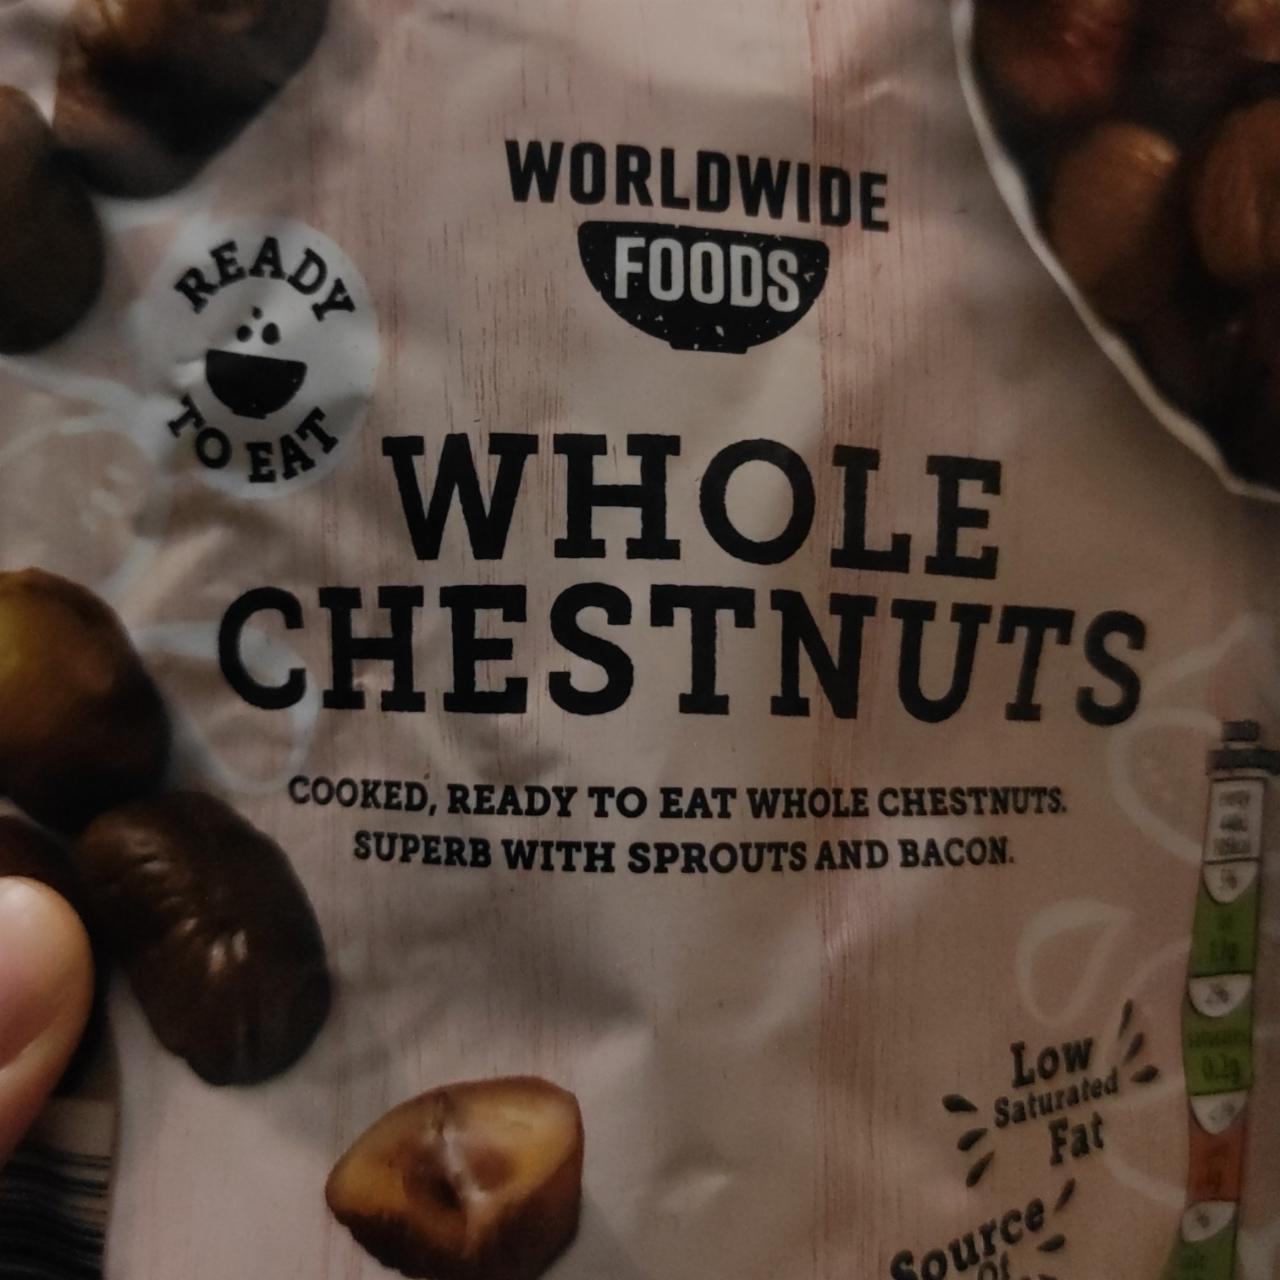 Fotografie - Whole Chestnuts Worldwide Foods